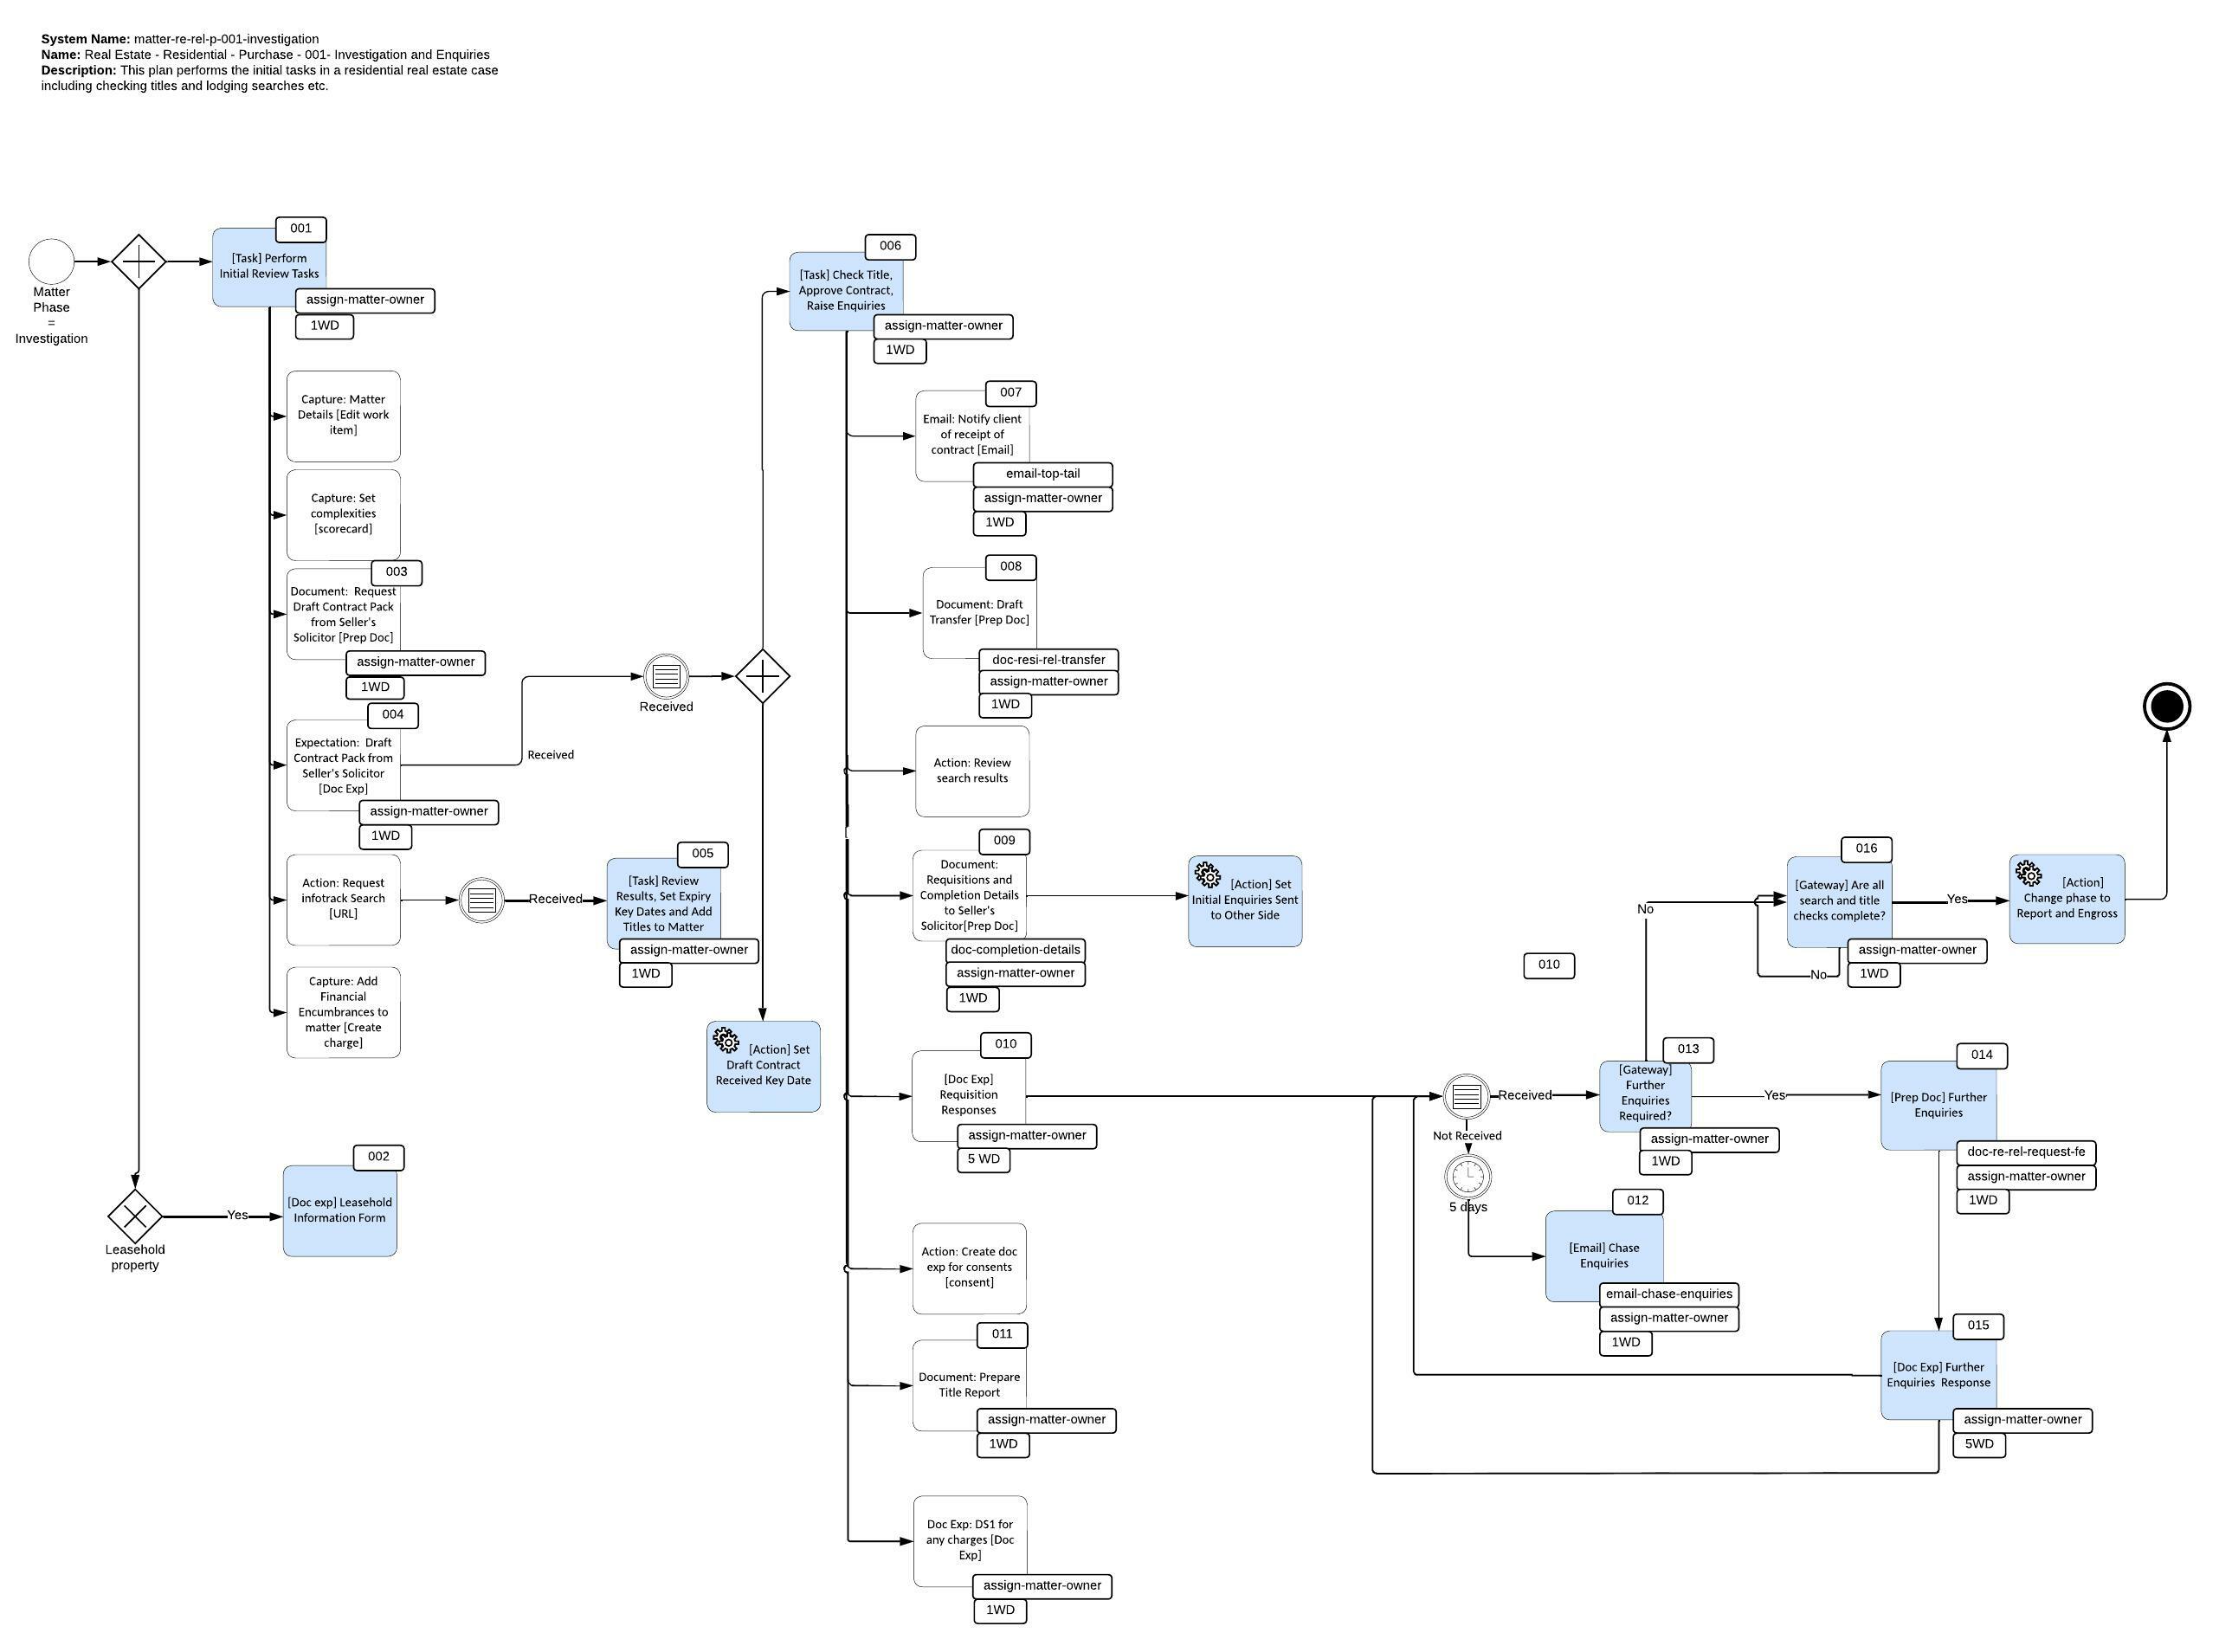 Process Modelling & Workflow Maps - sharedo